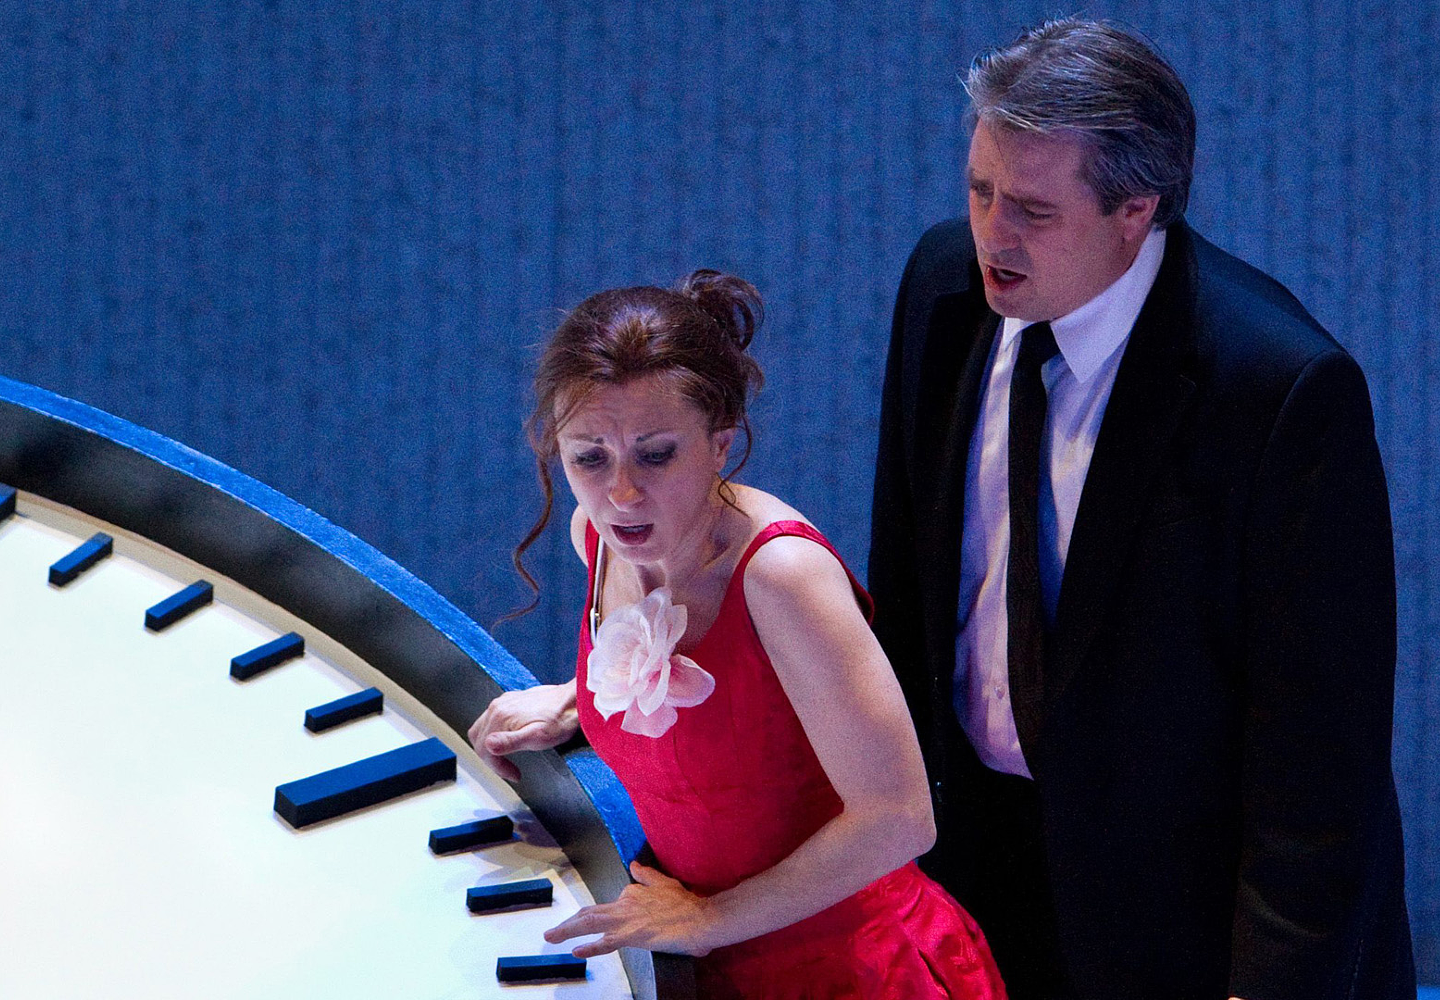 La Traviata: Nightly Met Opera streams